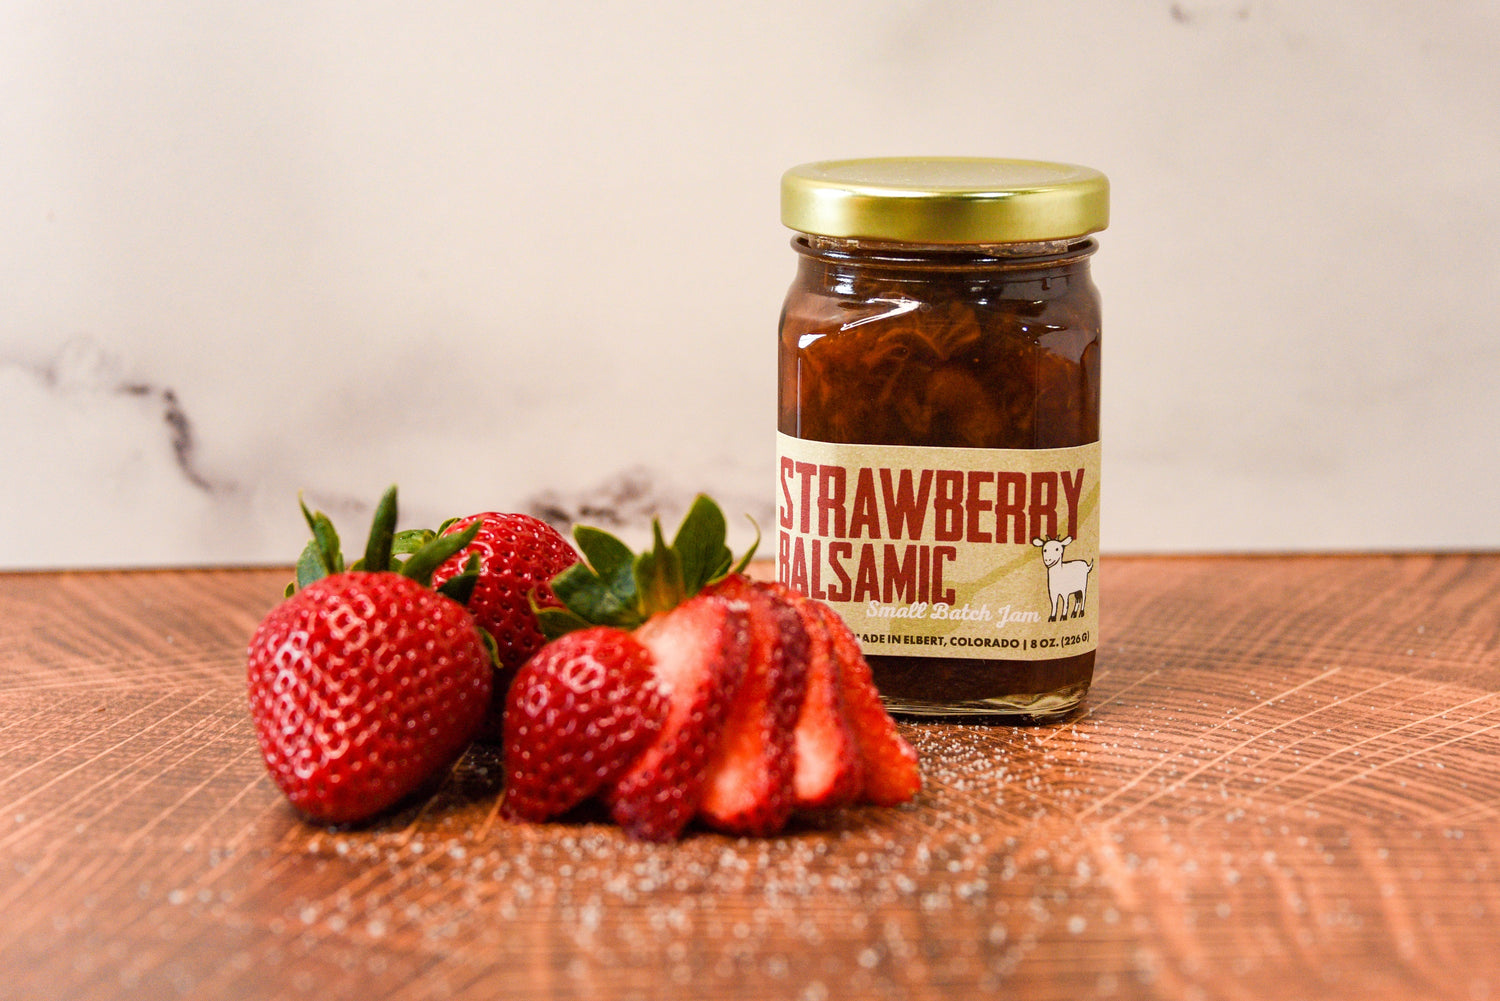 Naked Goat Farm Strawberry Balsamic Jam with Fresh Strawberries